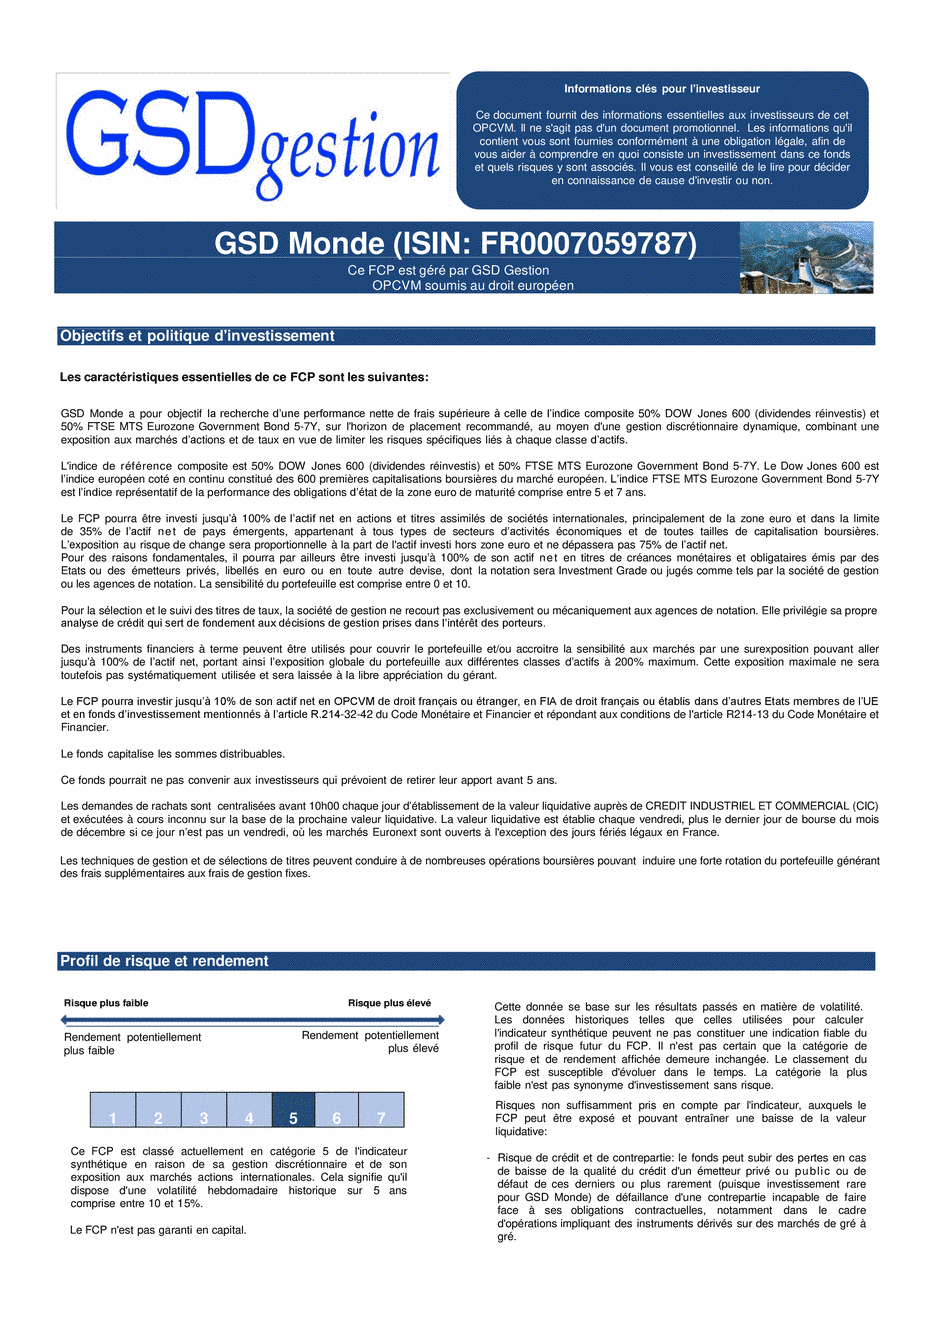 DICI-Prospectus GSD Monde - 13/01/2020 - Français